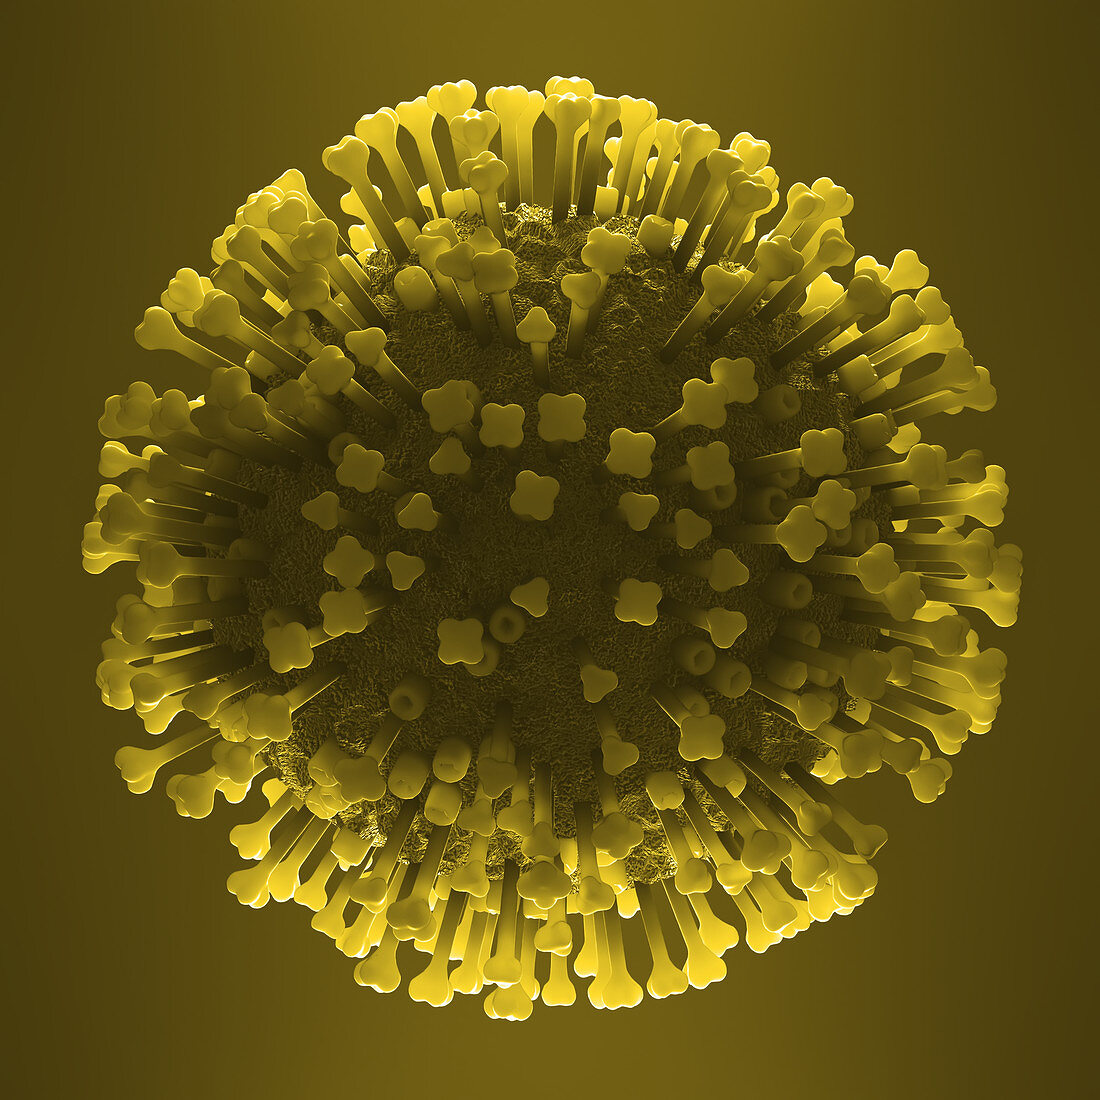 Influenza virus particle,illustration